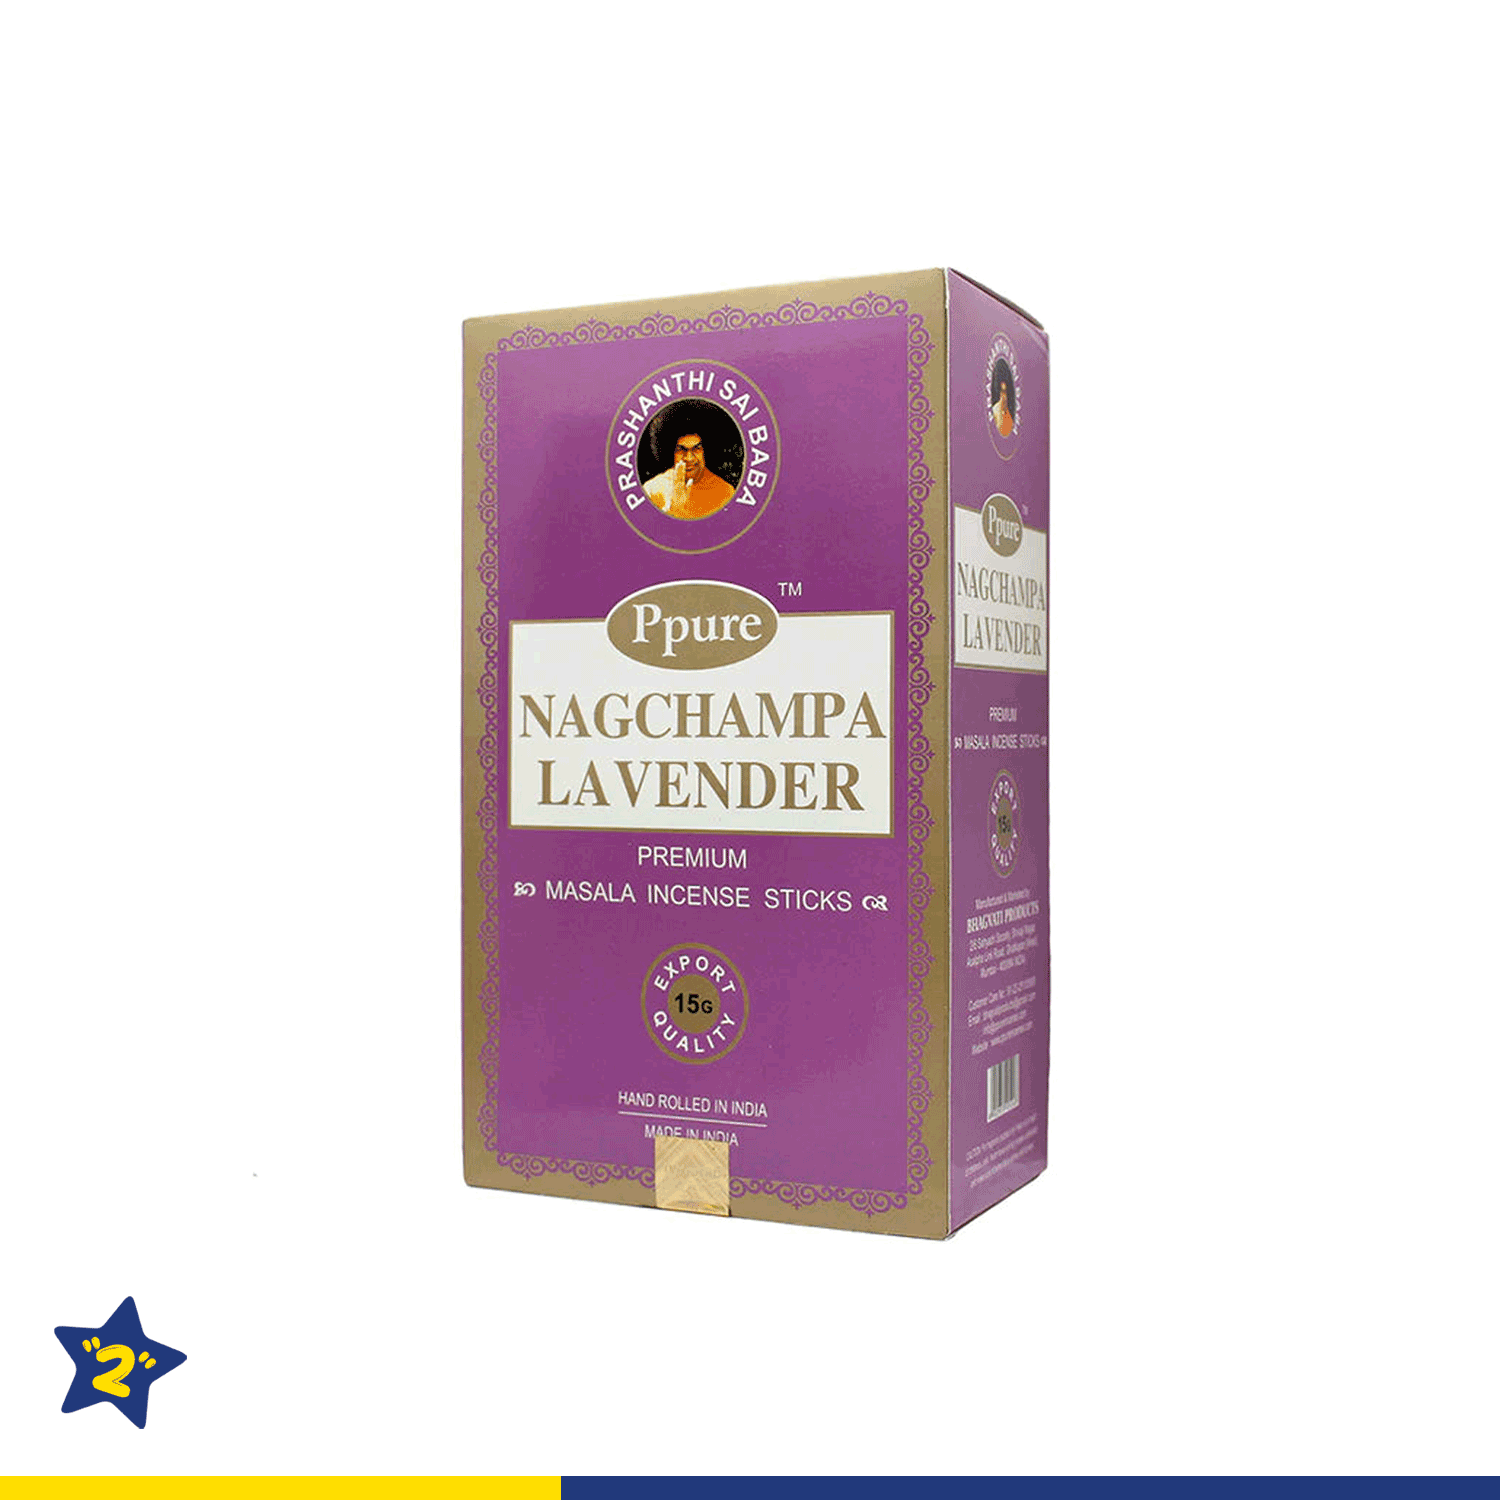 Ppure Nag Champa Lavender Incense